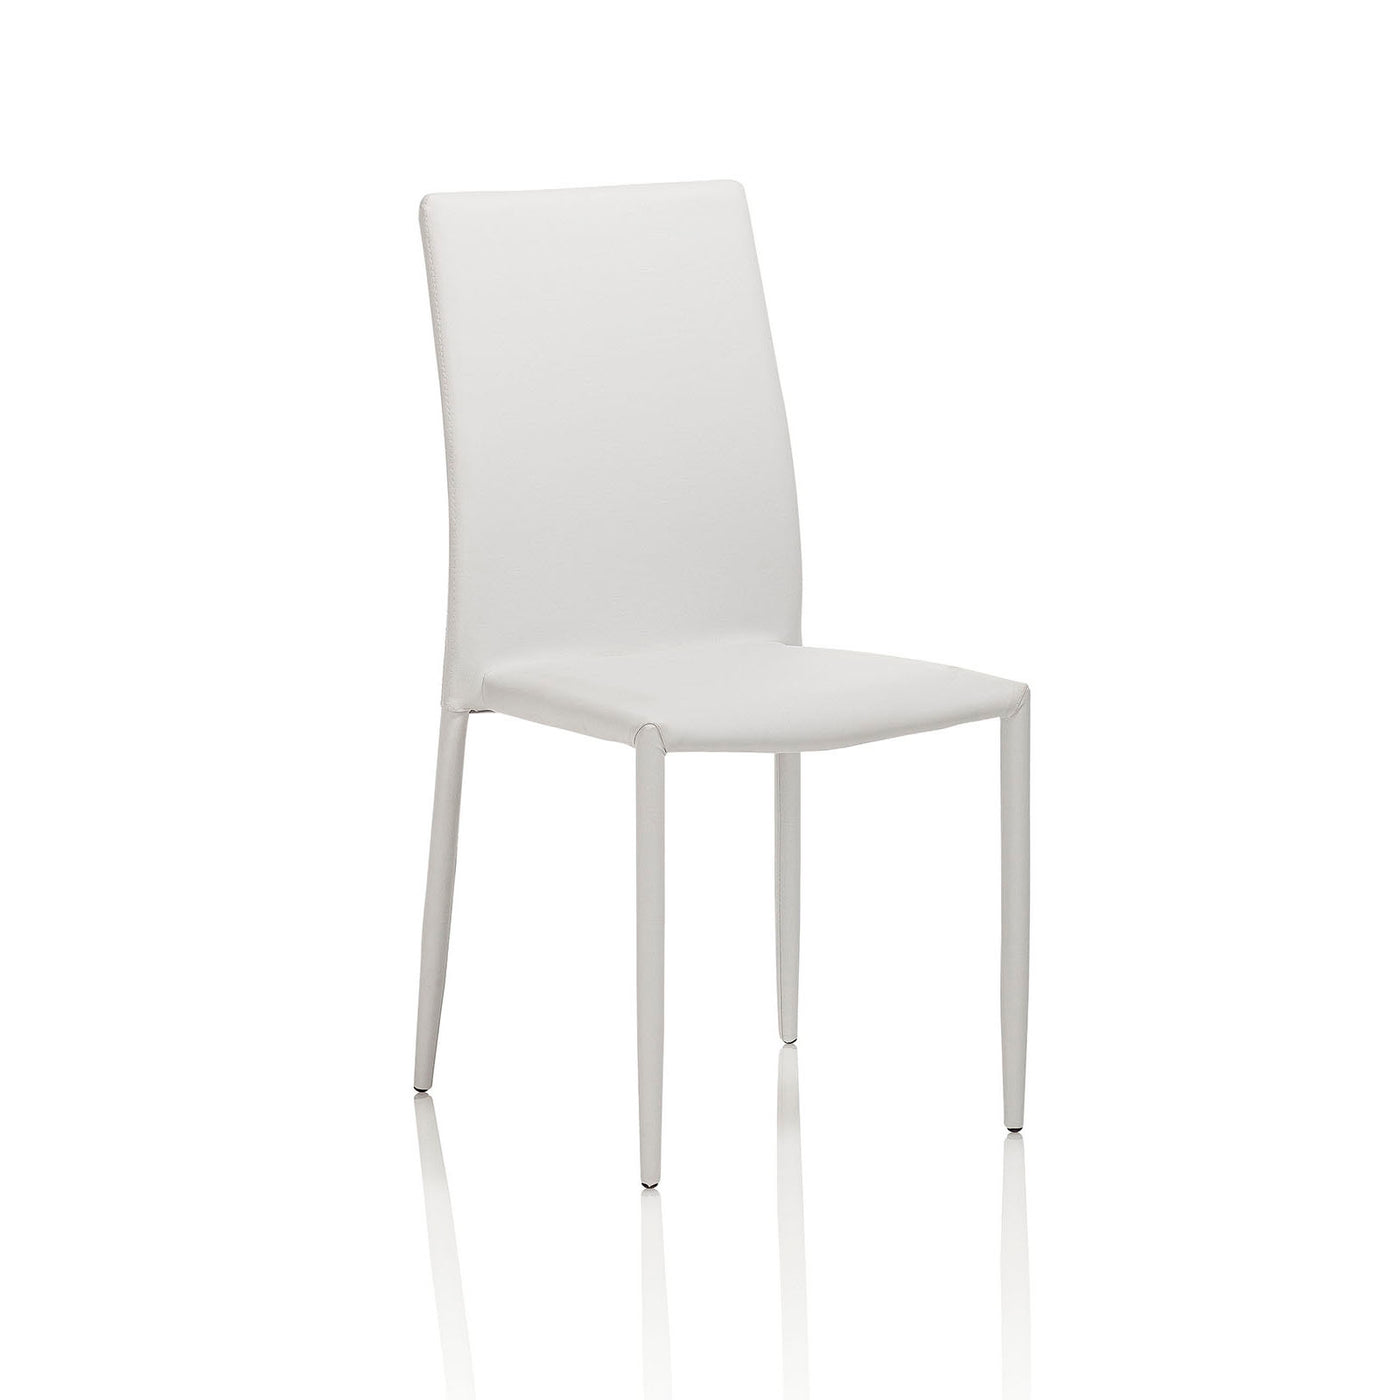 Set of 4 ADA white chairs